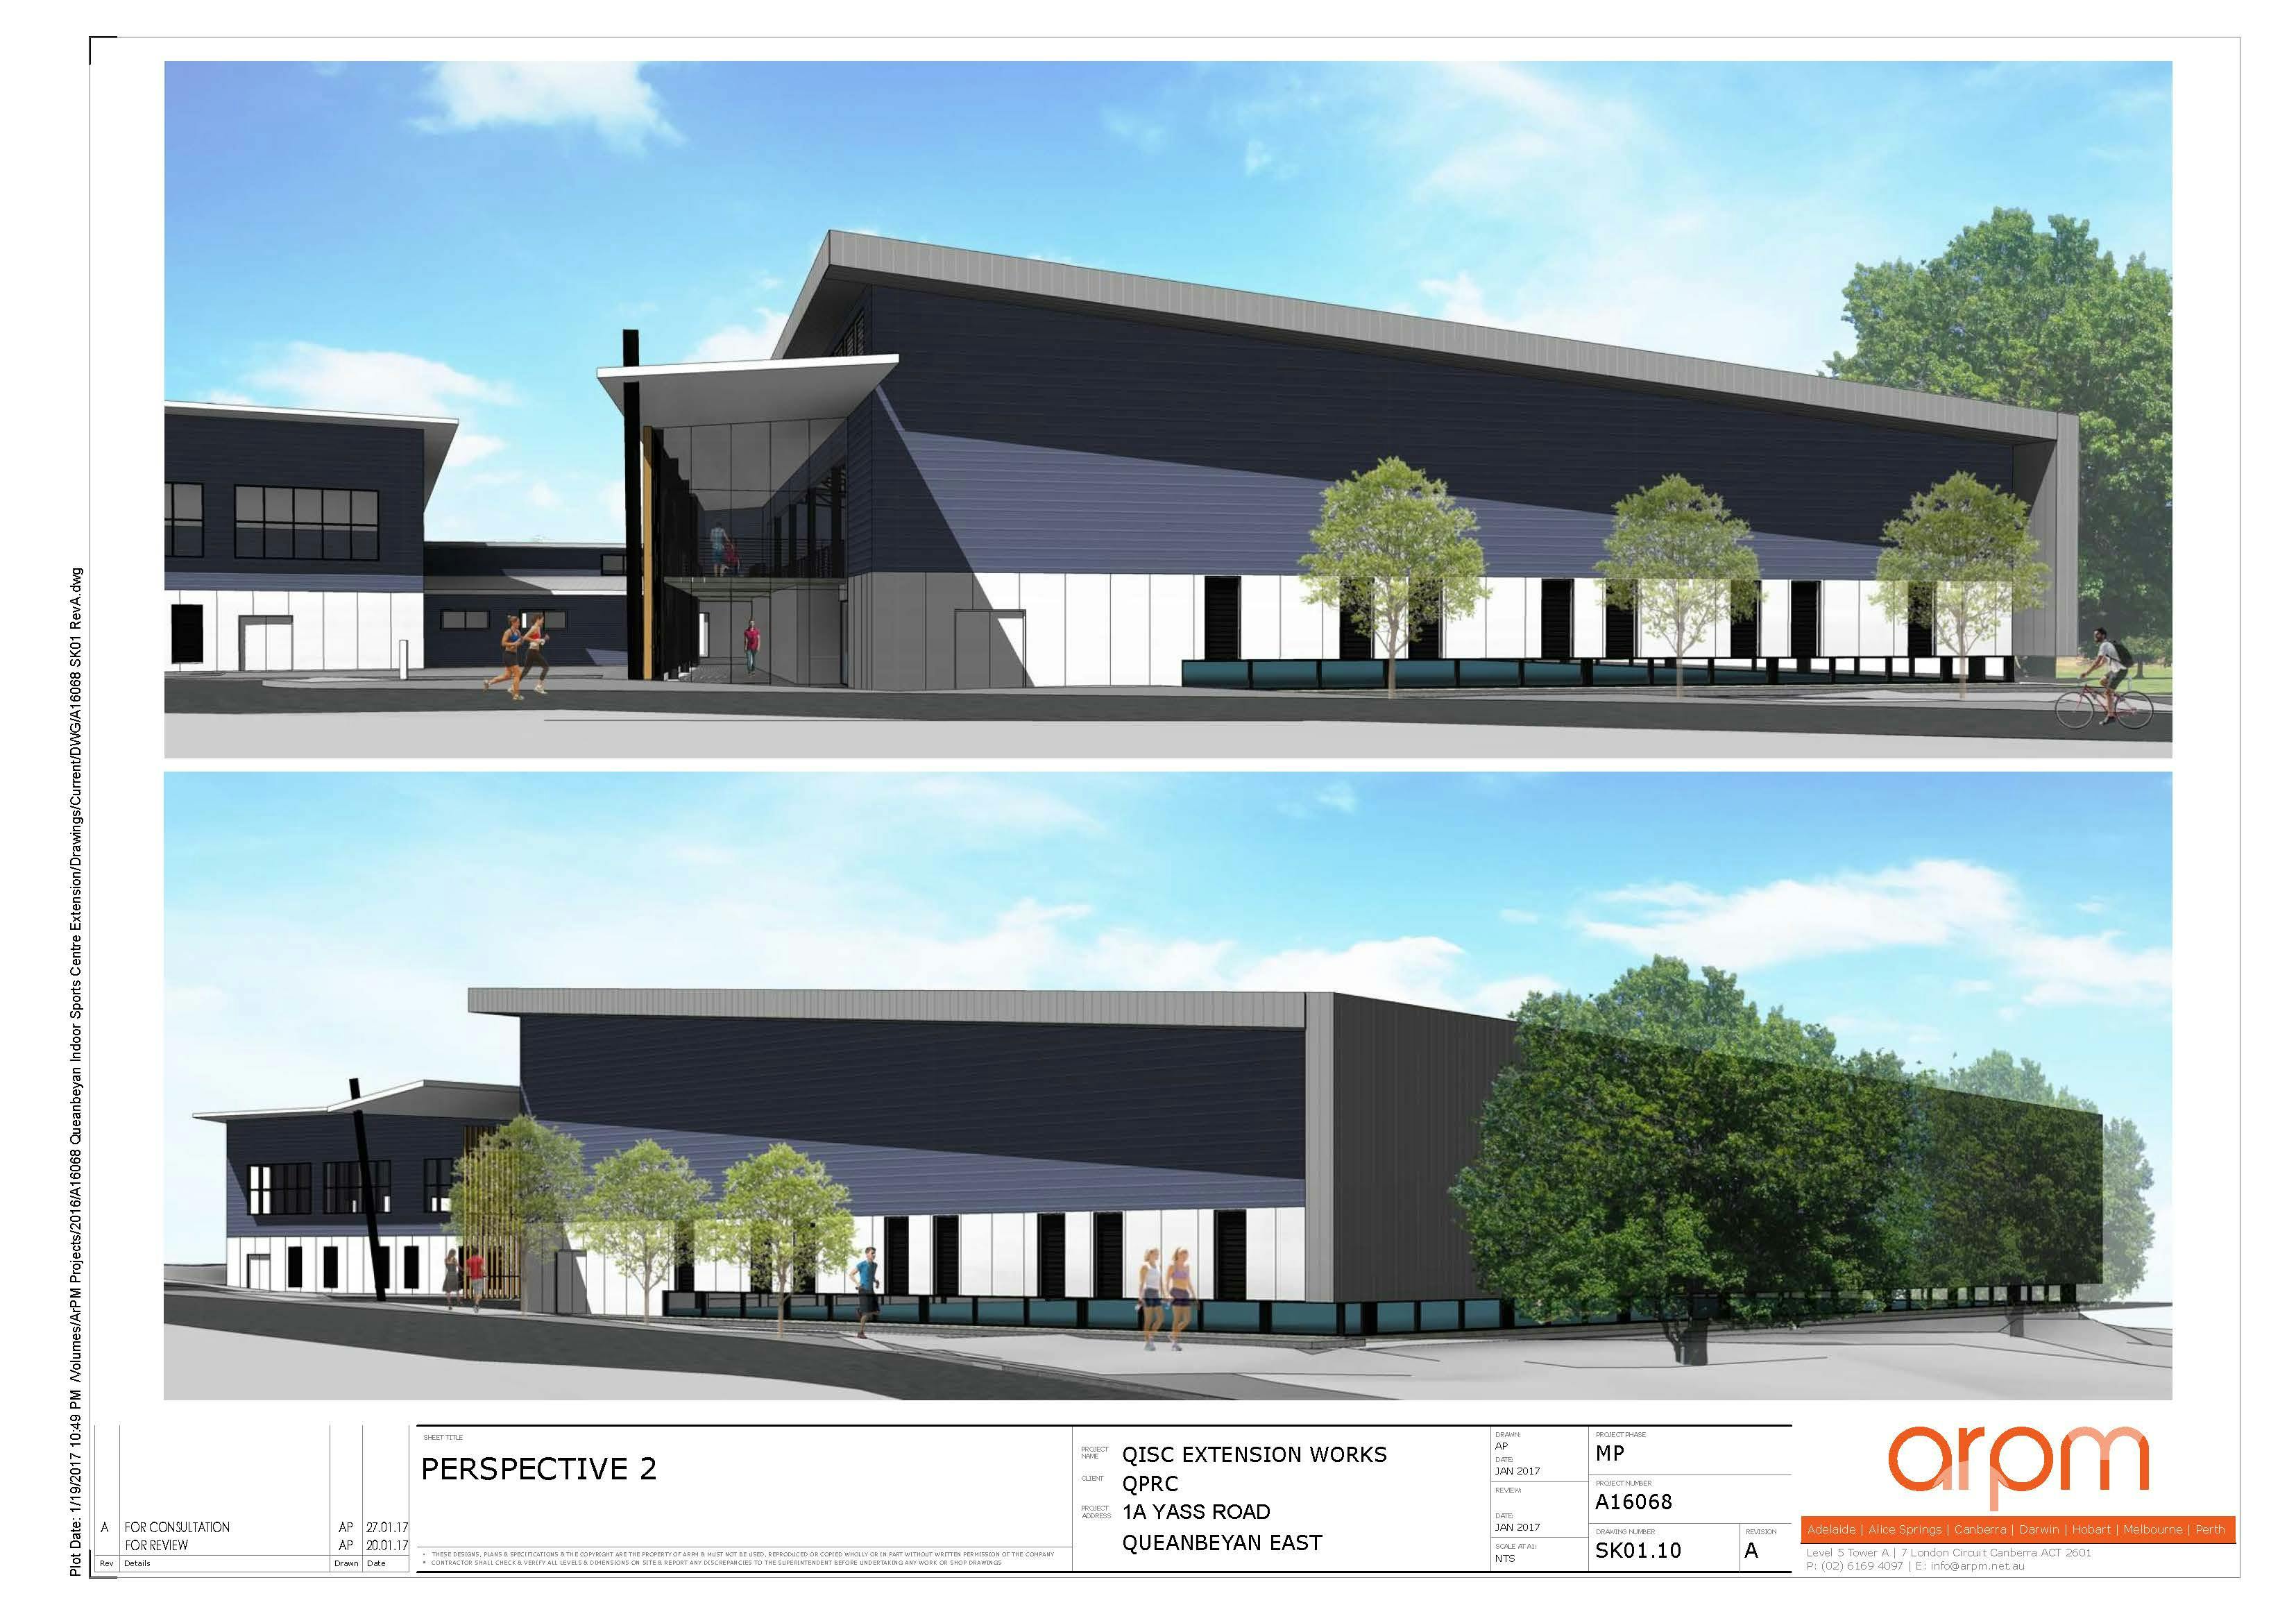  Queanbeyan  Indoor Sports Centre extension concept plans  